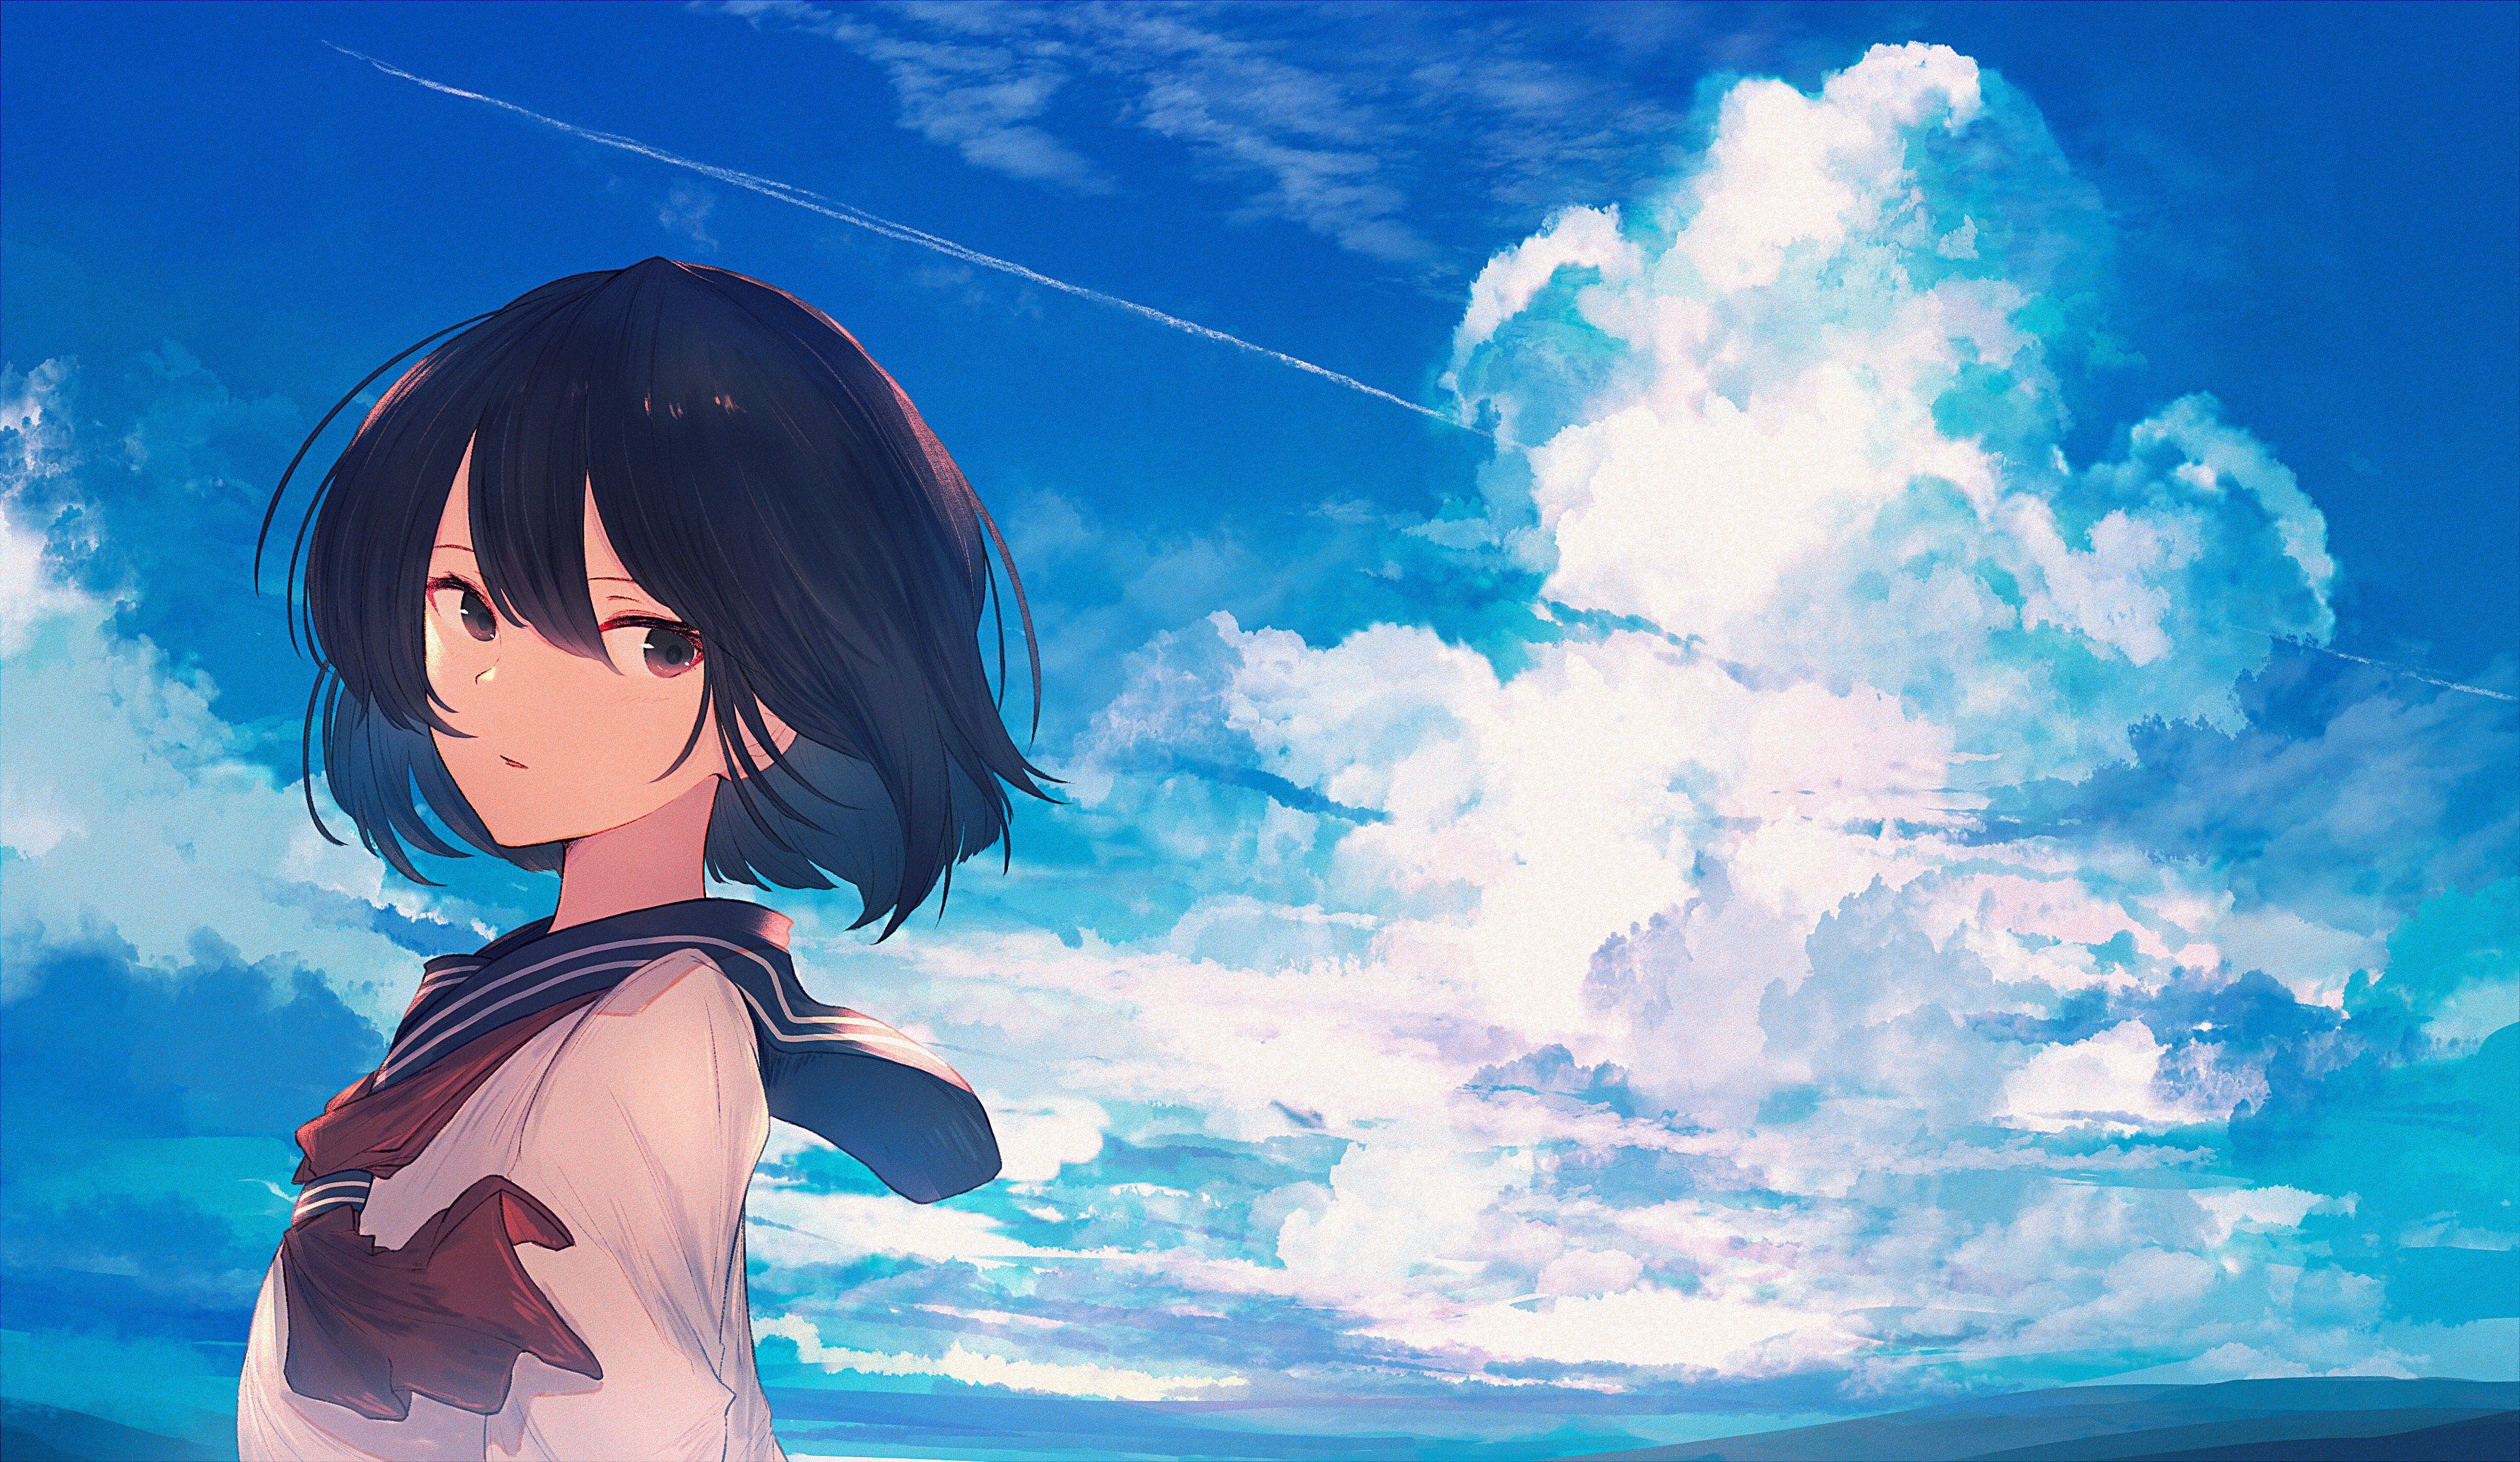 Anime Anime Girls Short Hair Black Hair Women Students Schoolgirl Uniform Landscape Clouds Digital D 4000x2320